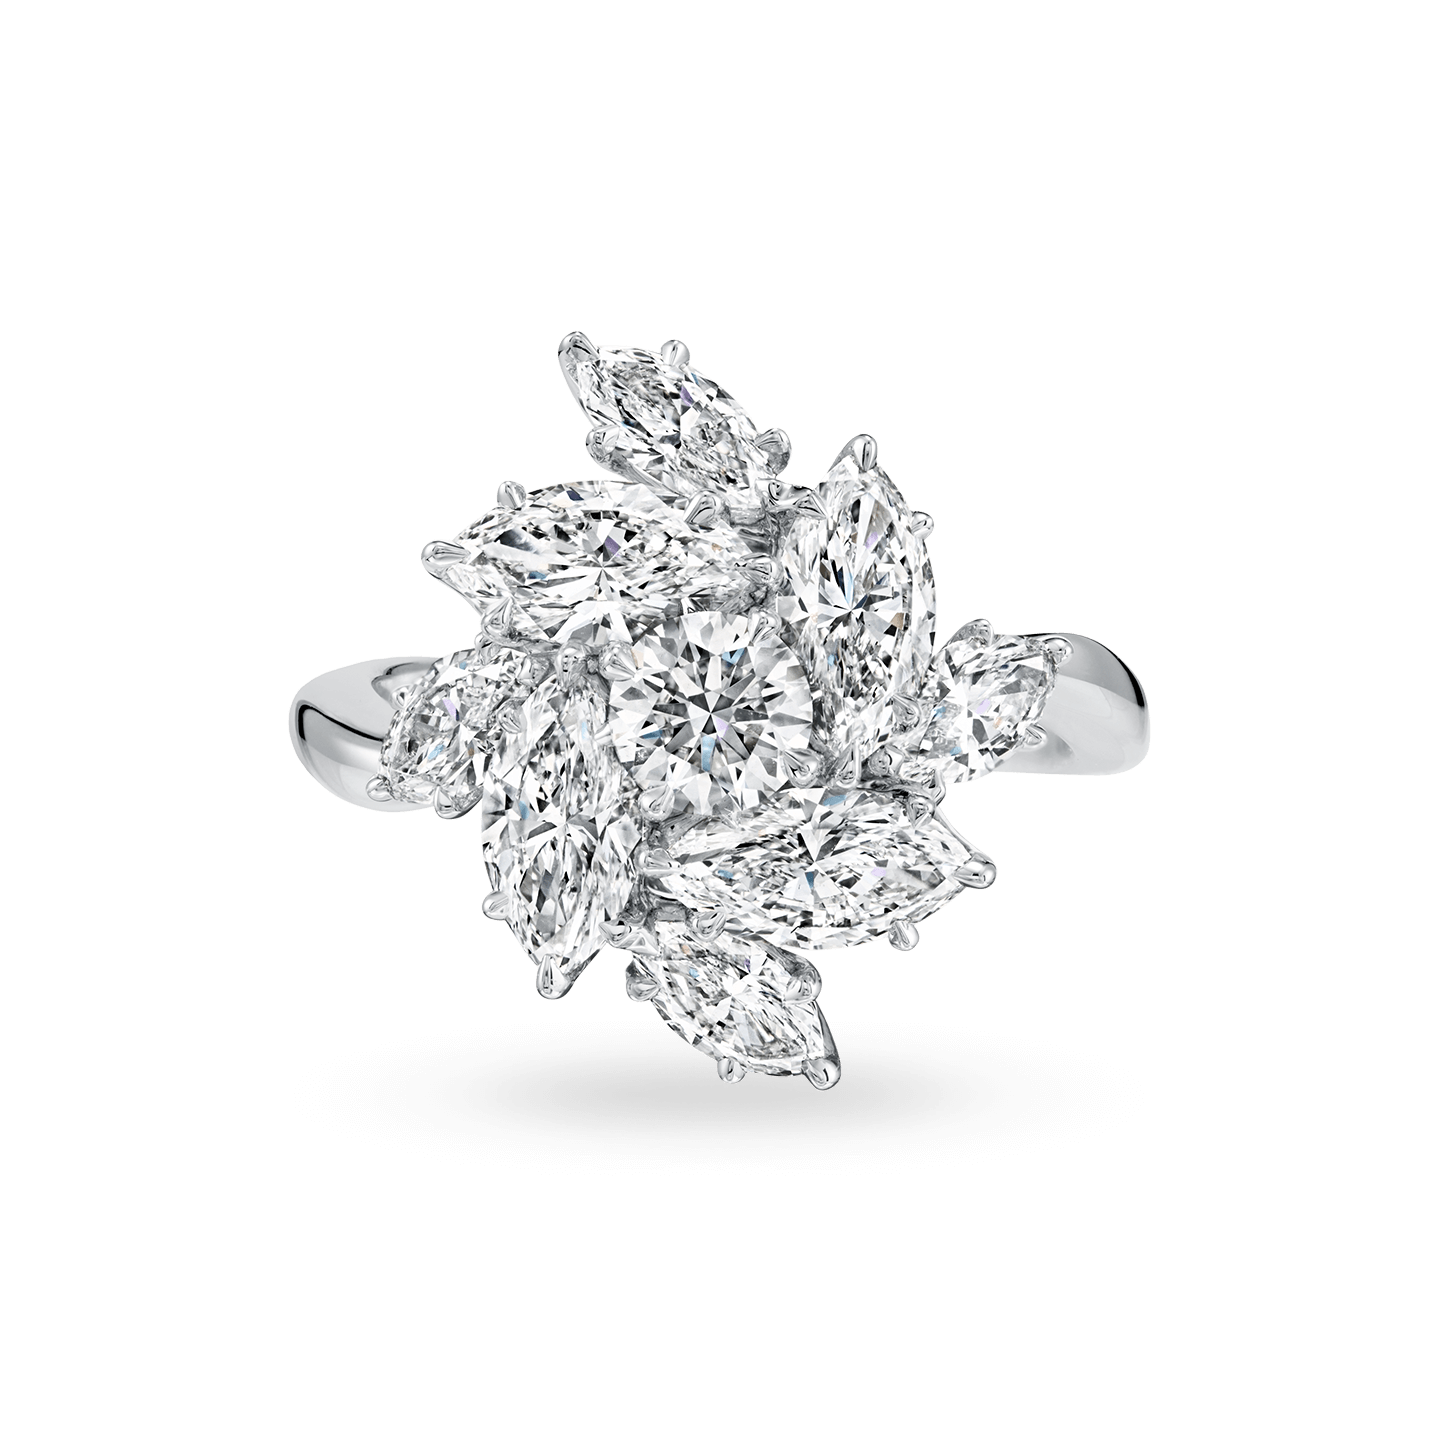 Pirouette Diamond Ring, Product Image 1